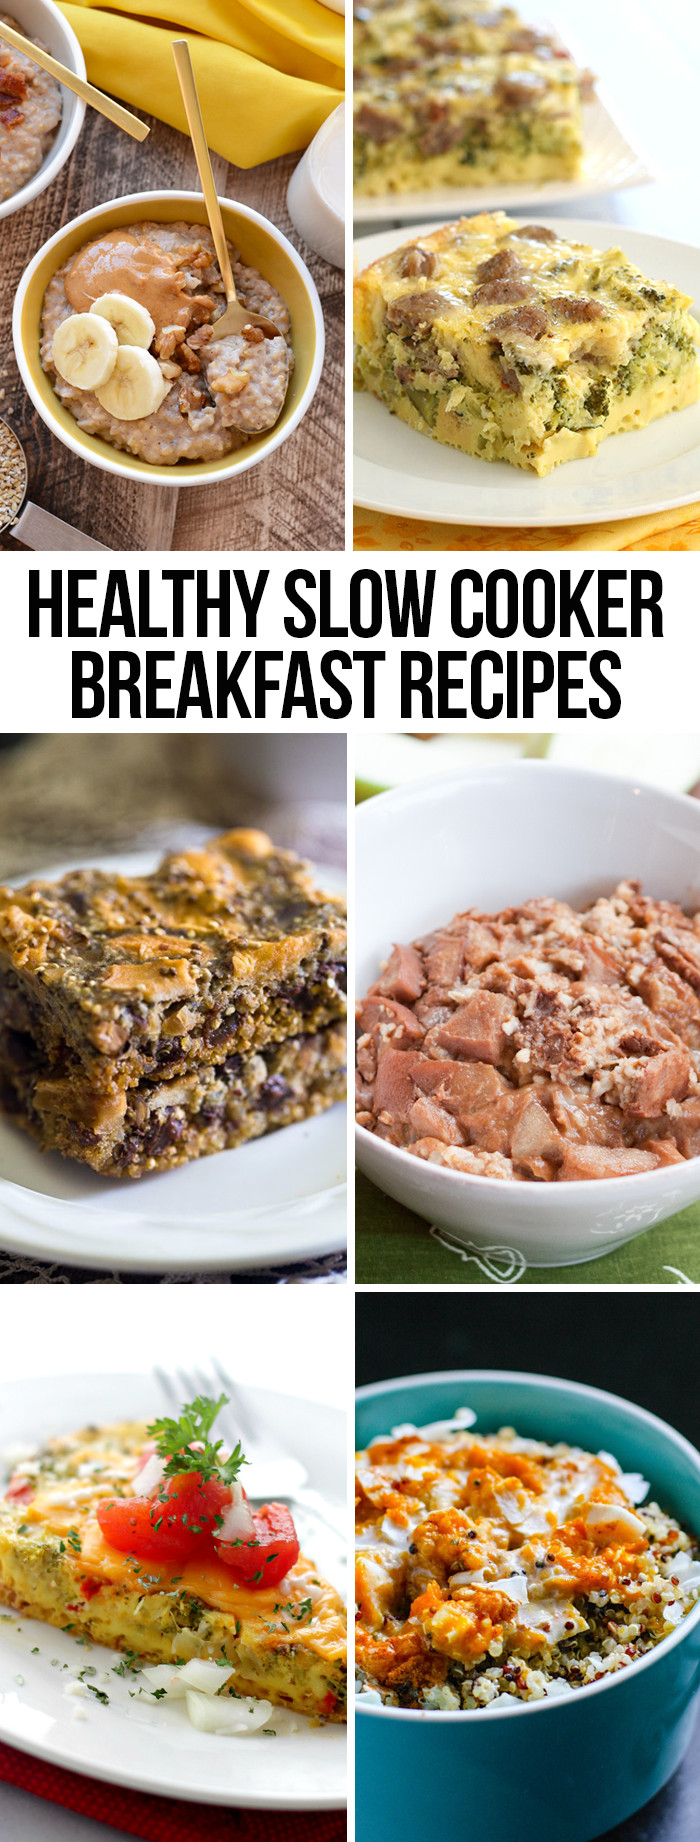 Slow Cooker Breakfast Recipes Healthy the Best Ideas for Healthy Slow Cooker Breakfast Recipes